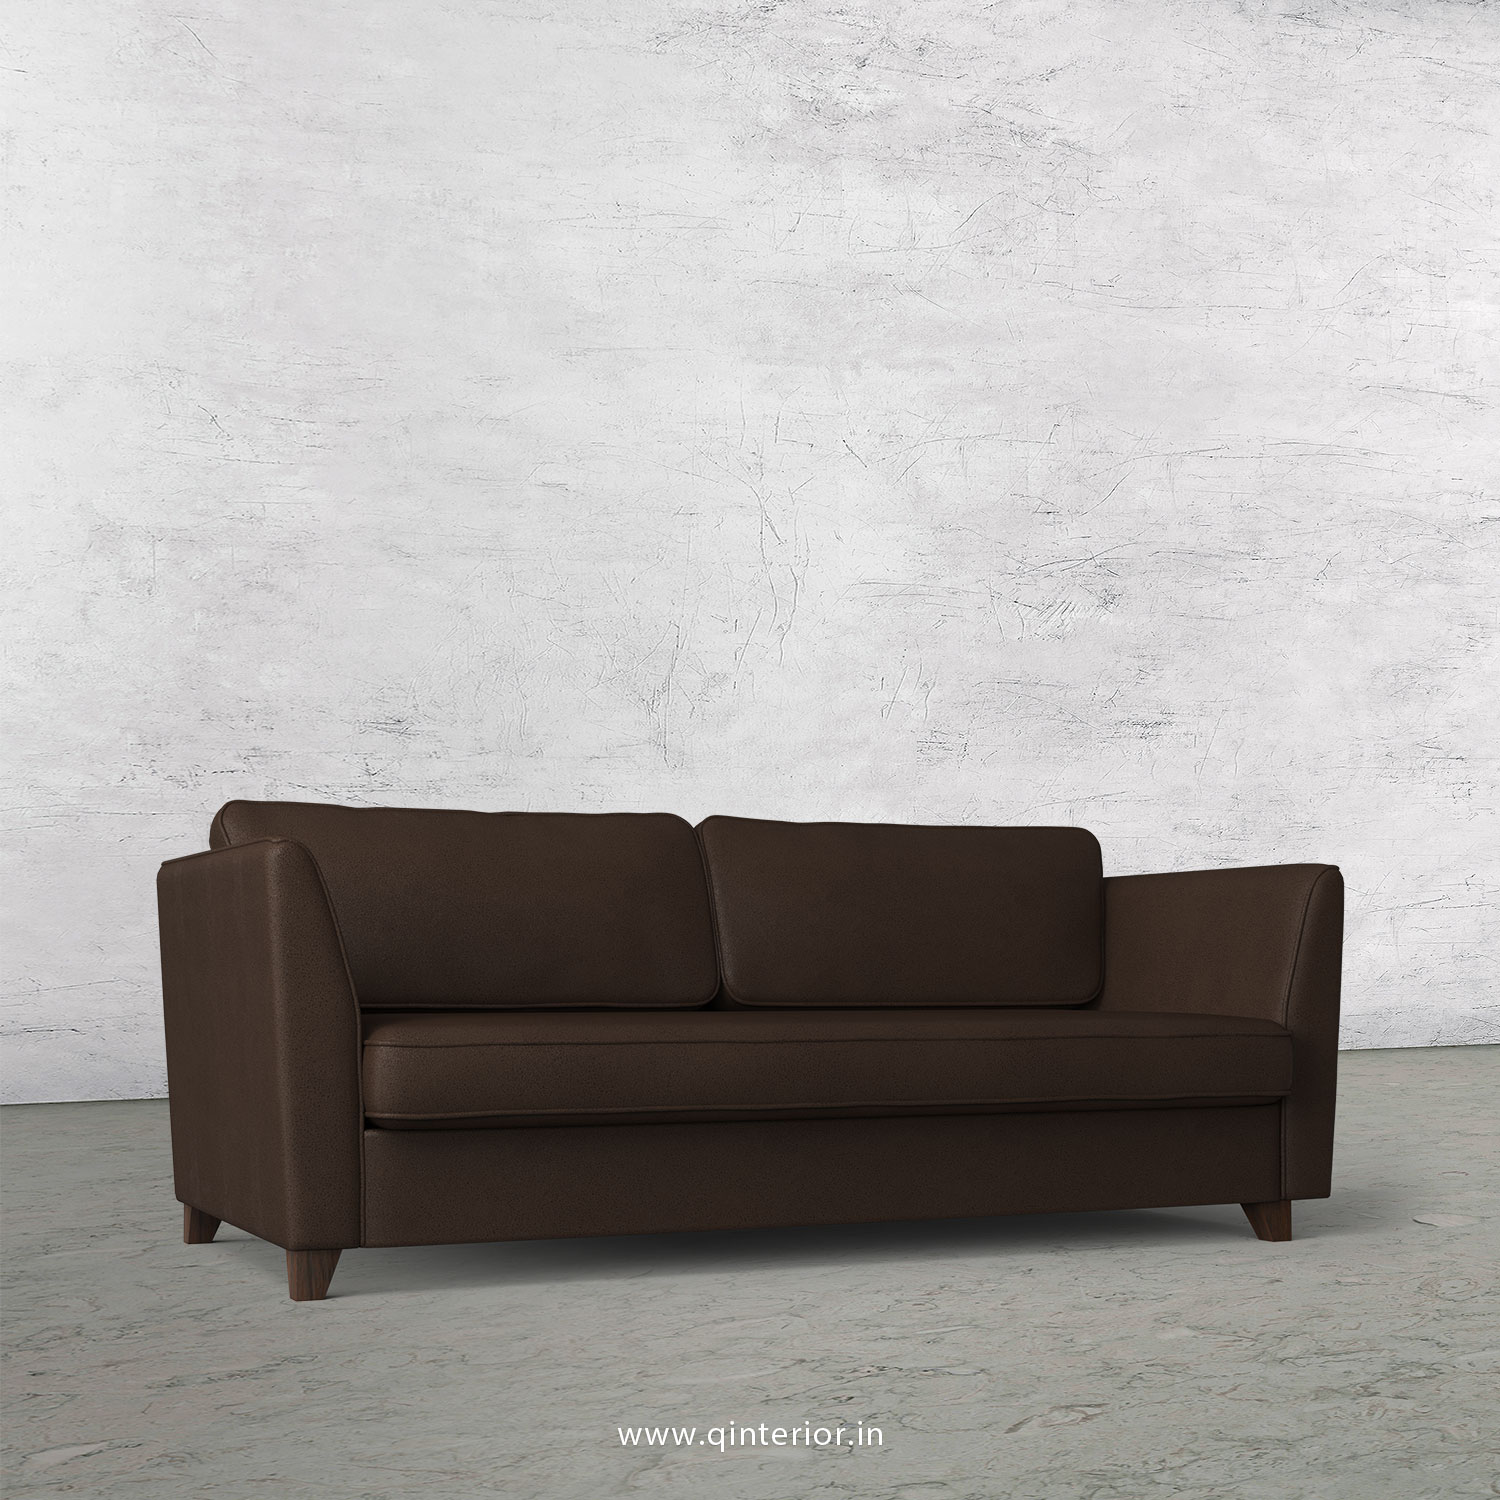 KINGSTONE 3 Seater Sofa in Fab Leather Fabric - SFA004 FL16